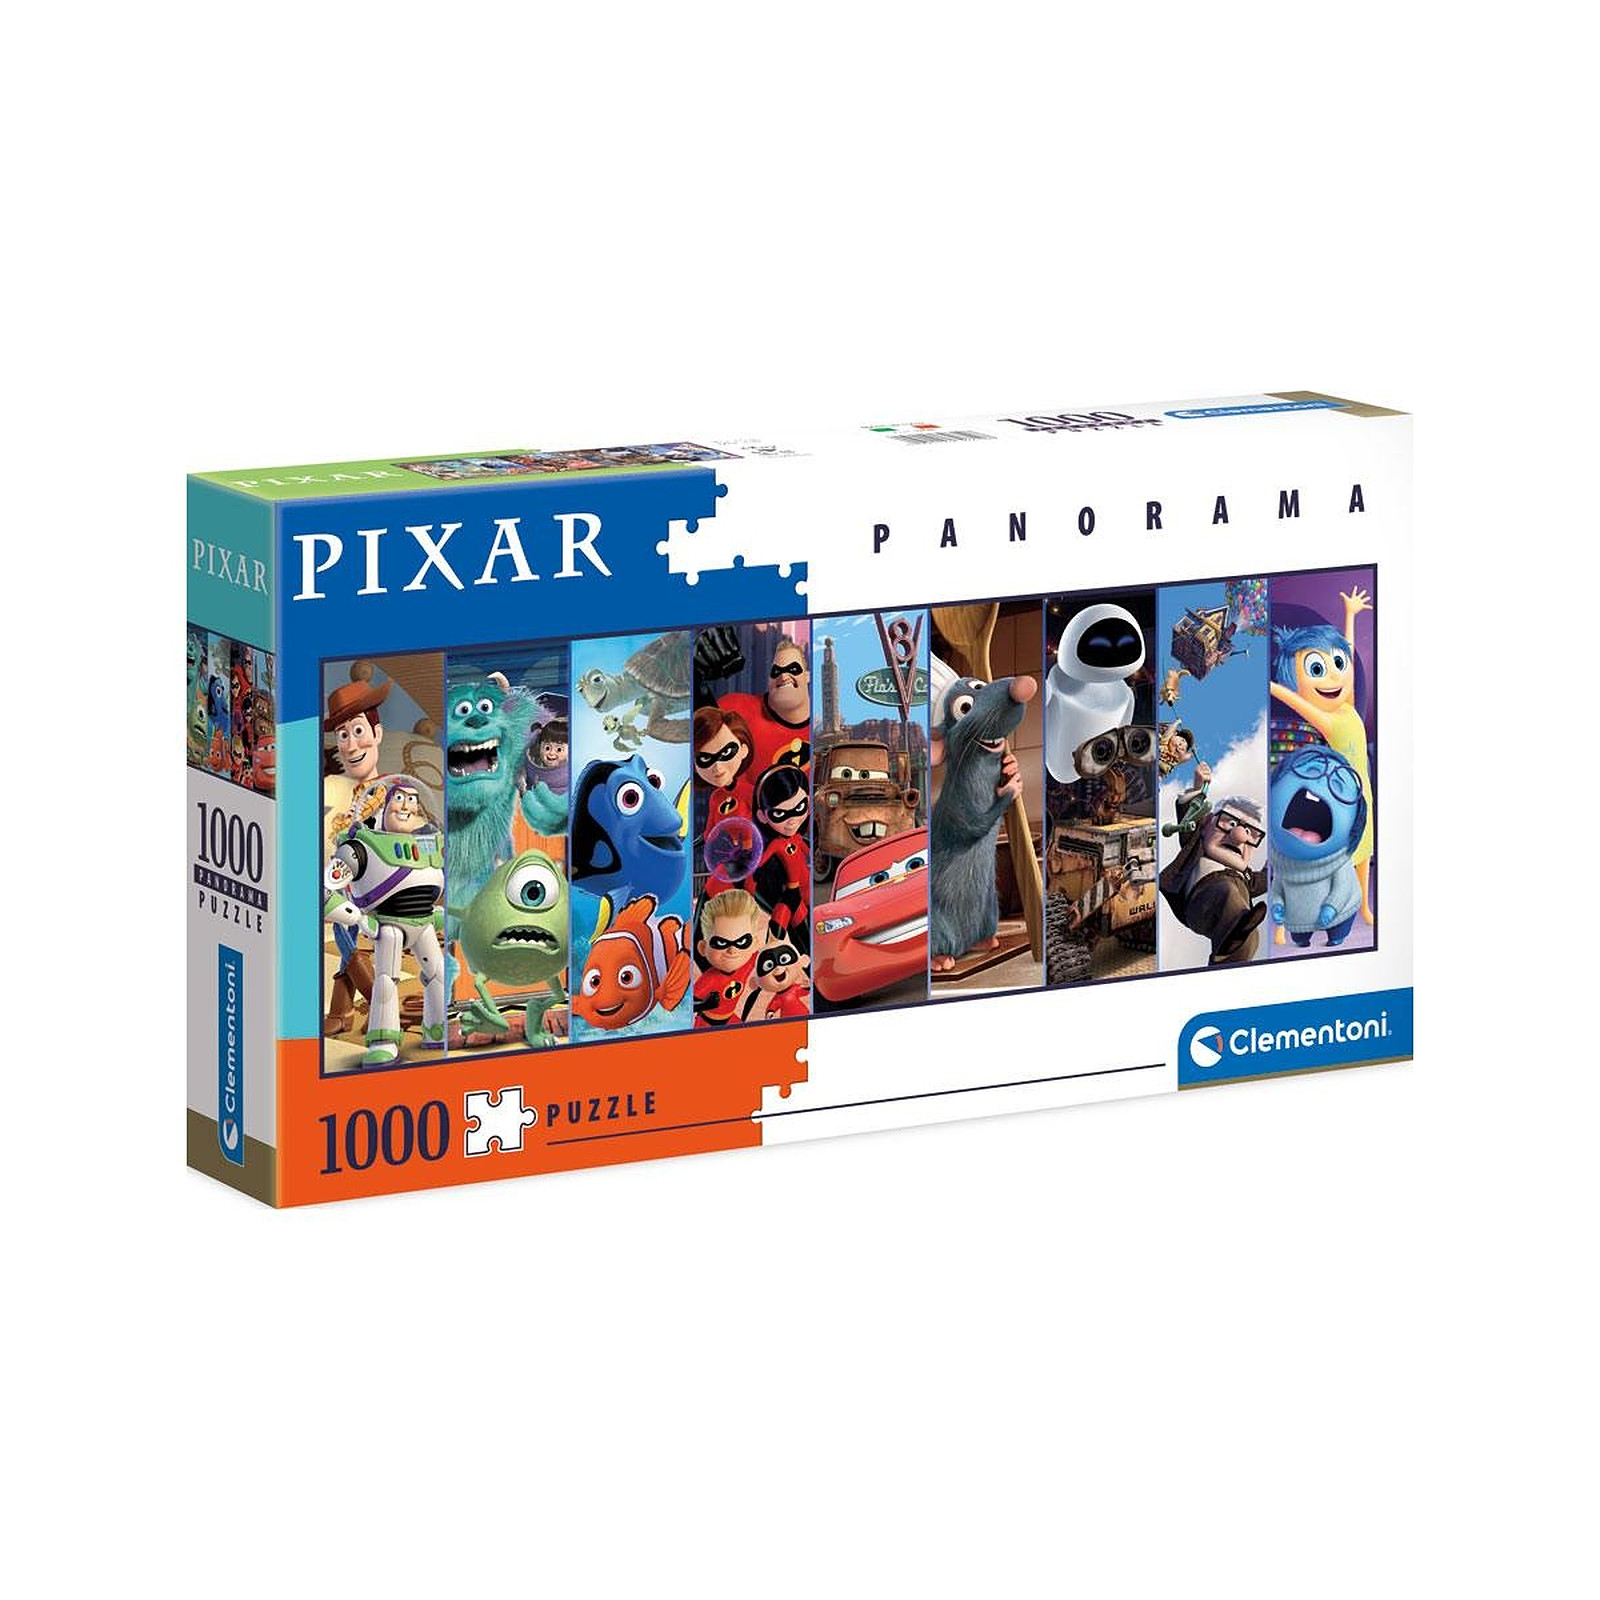 Disney - Puzzle Panorama Pixar (1000 pièces) - Puzzle Clementoni